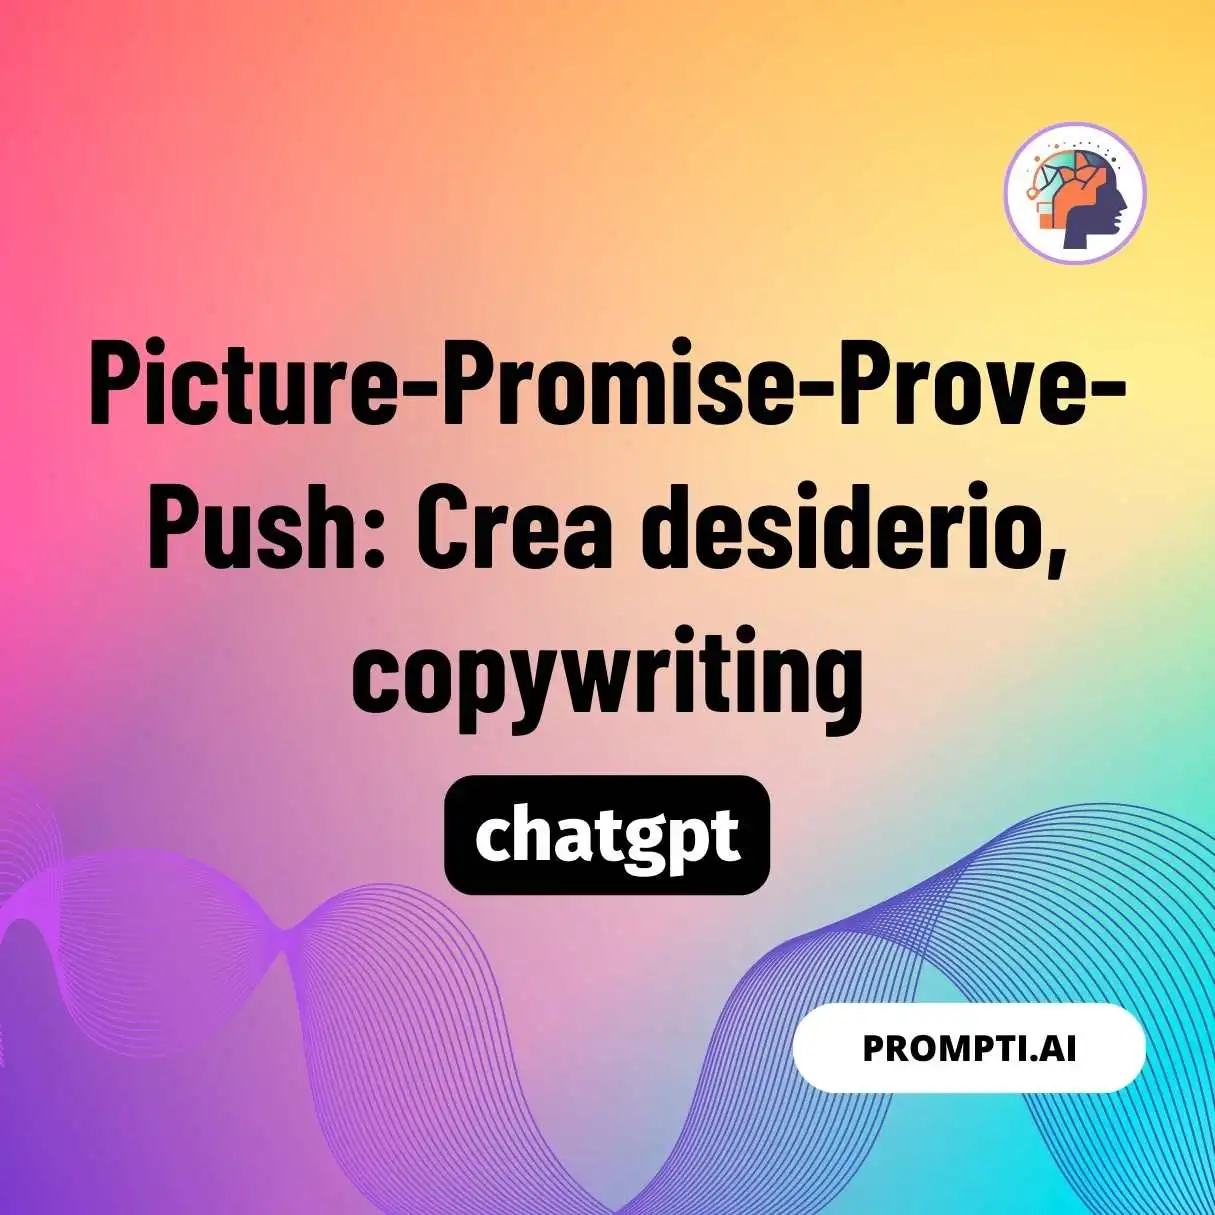 Picture-Promise-Prove-Push: Crea desiderio, copywriting